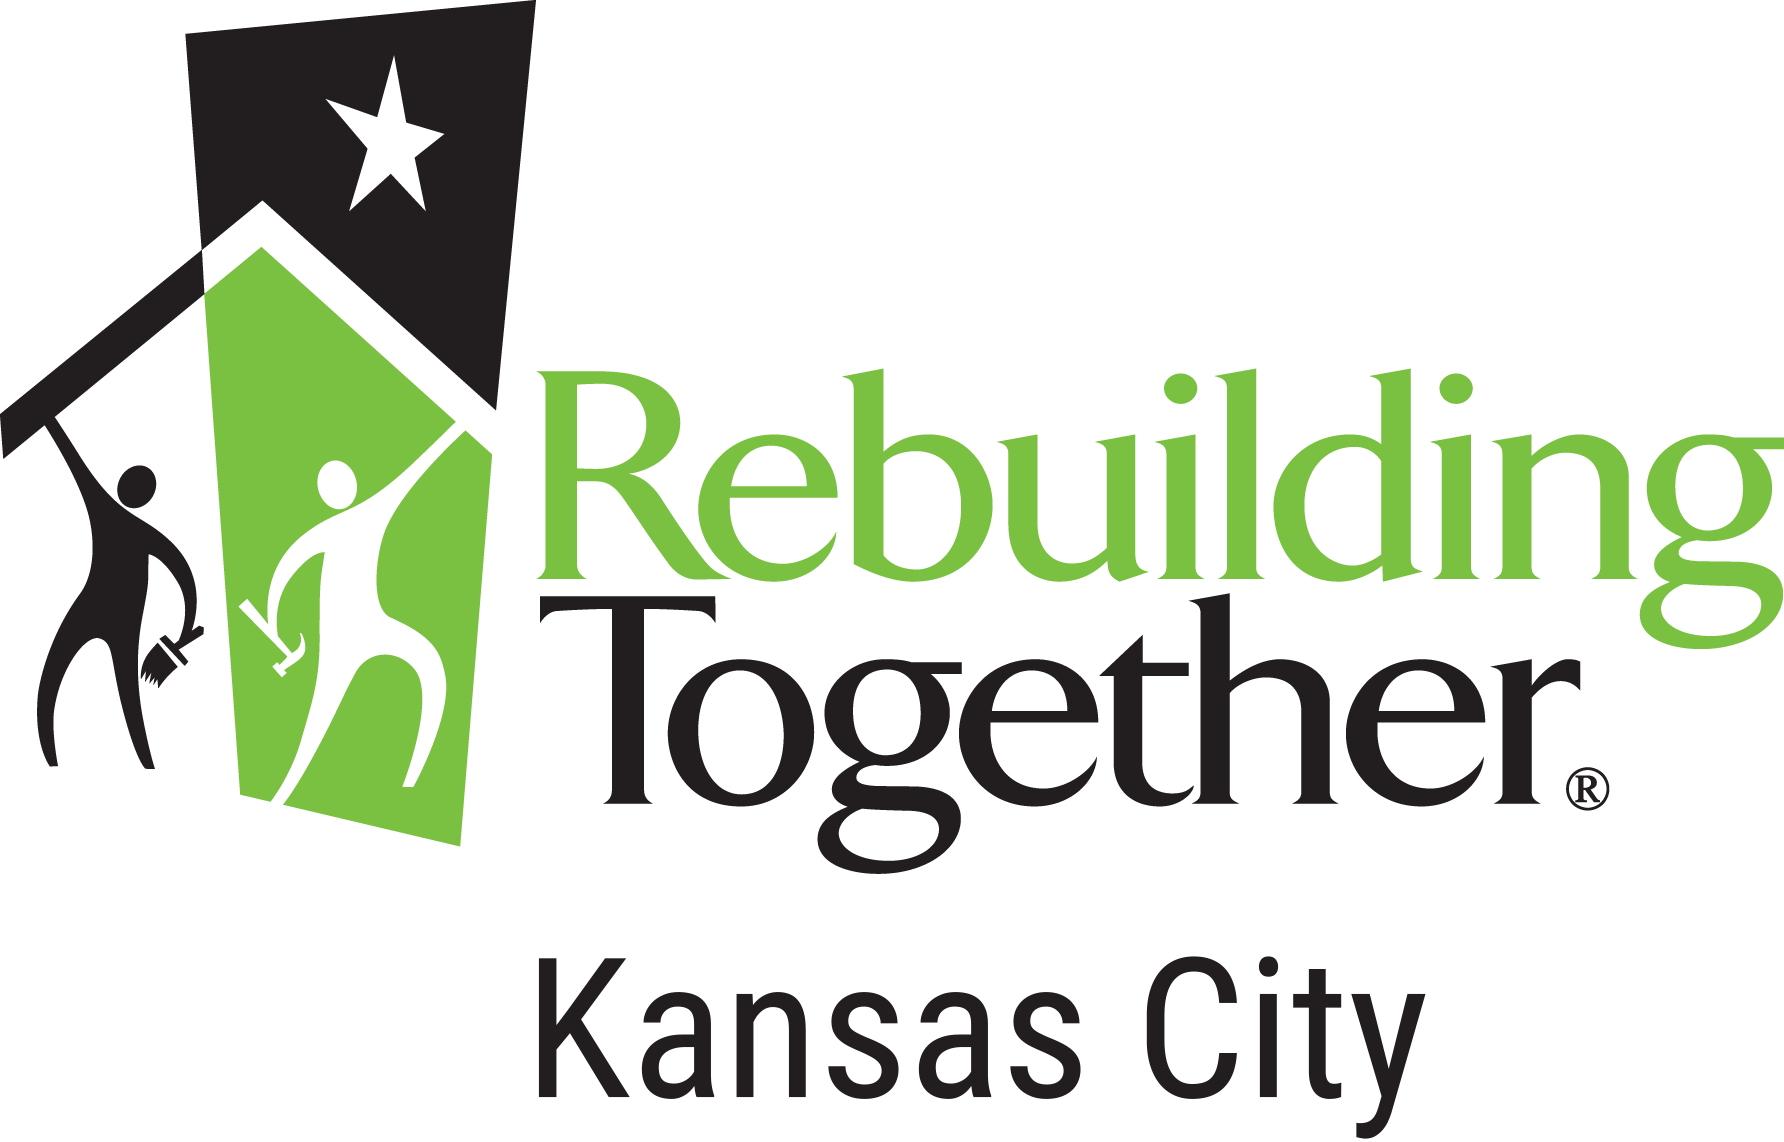 Rebuilding Together Kansas City Logo